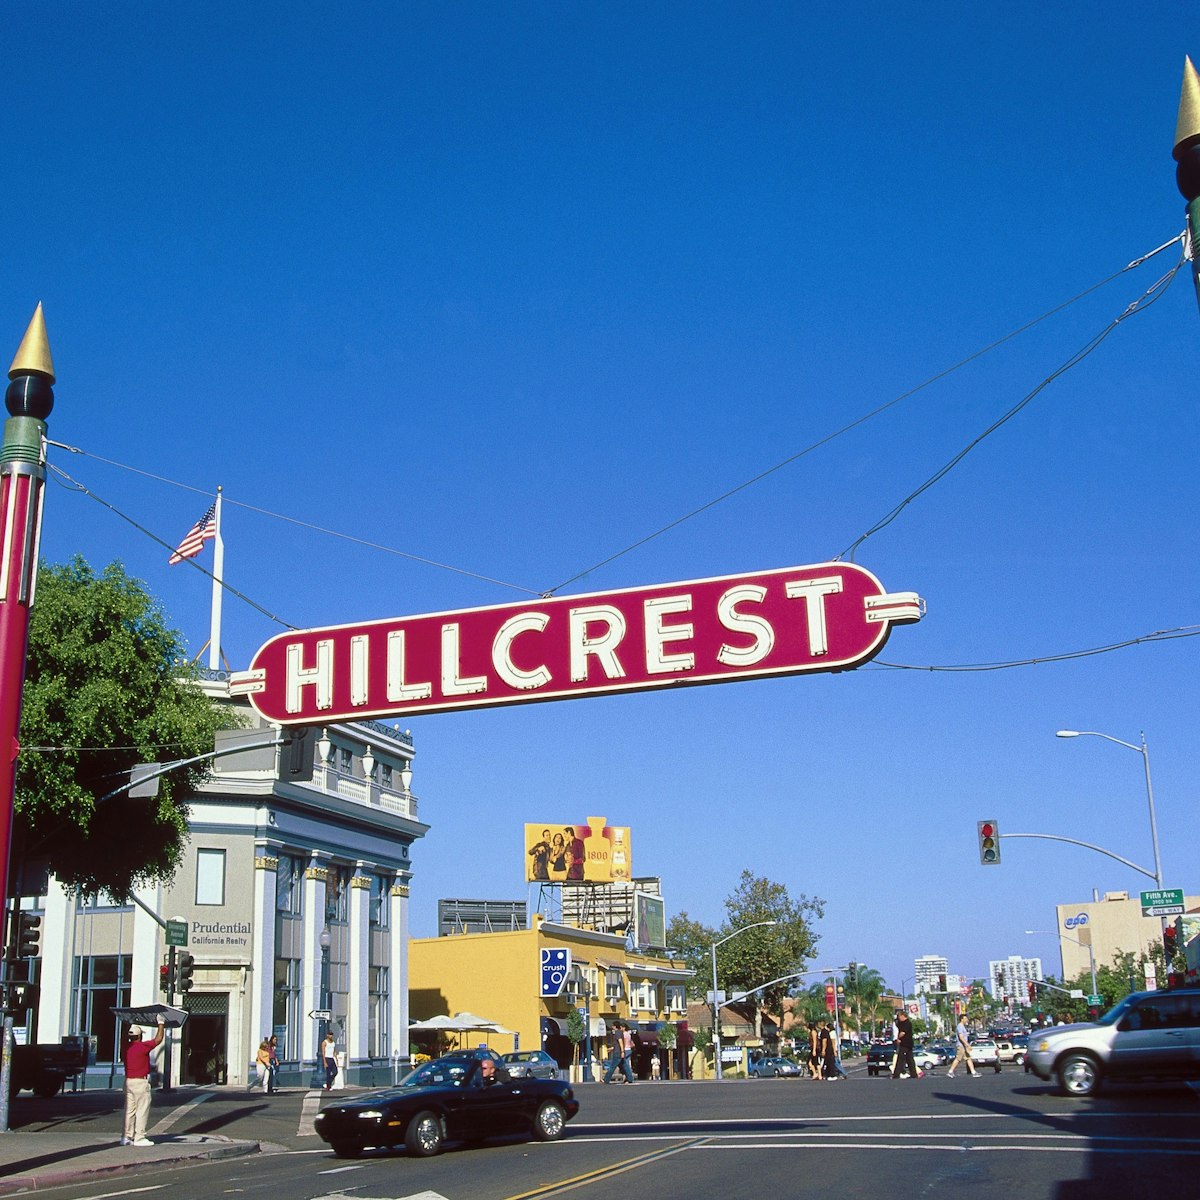 CA, San Diego, Hillcrest sign at University Ave - stock photo

Hillcrest Gateway
